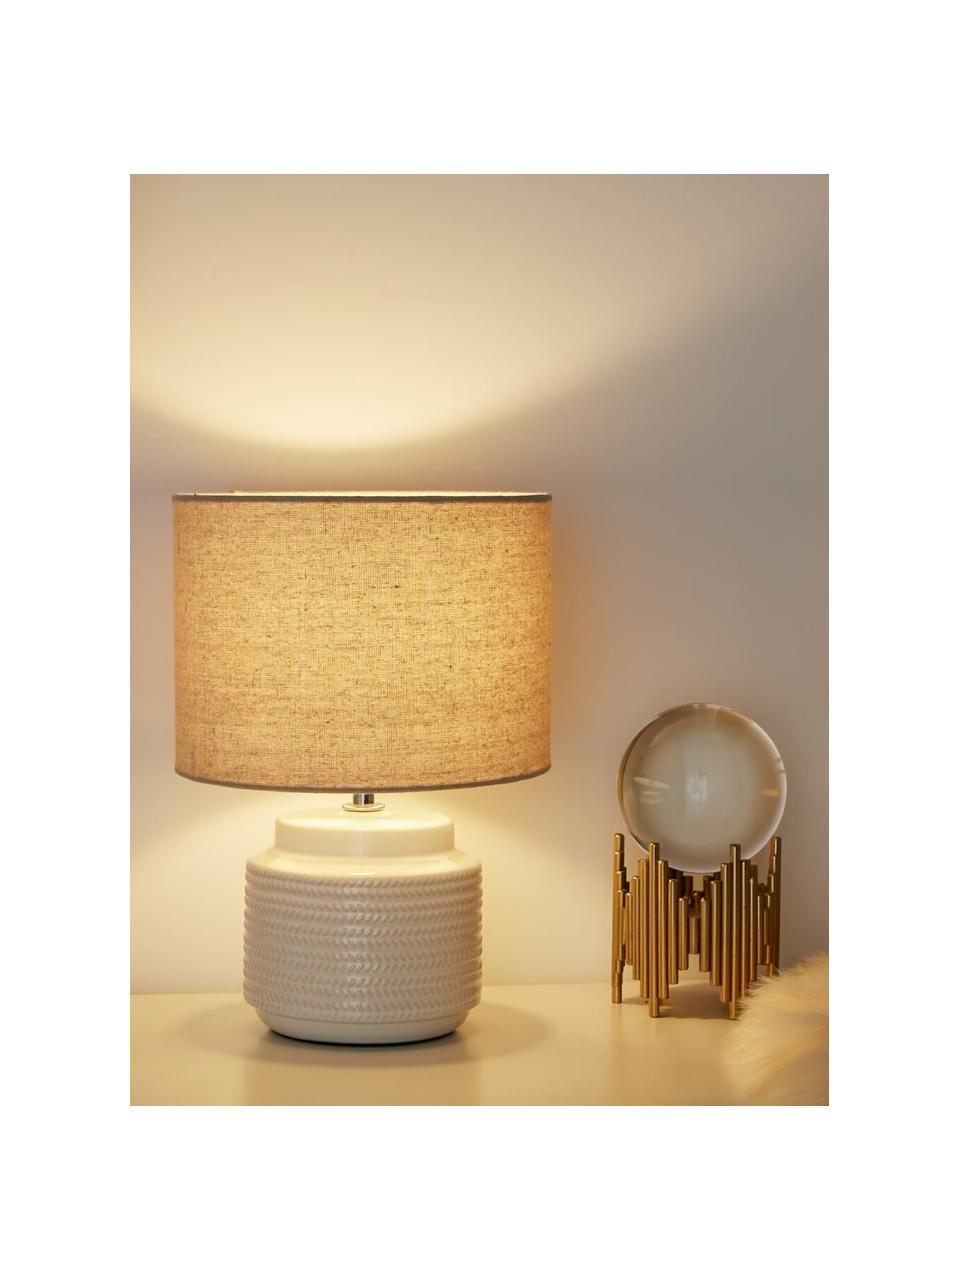 Lámpara de mesa pequeña Bright Soul, Pantalla: tela, Cable: plástico, Crema con borde oscuro, Ø 18 x Al 30 cm